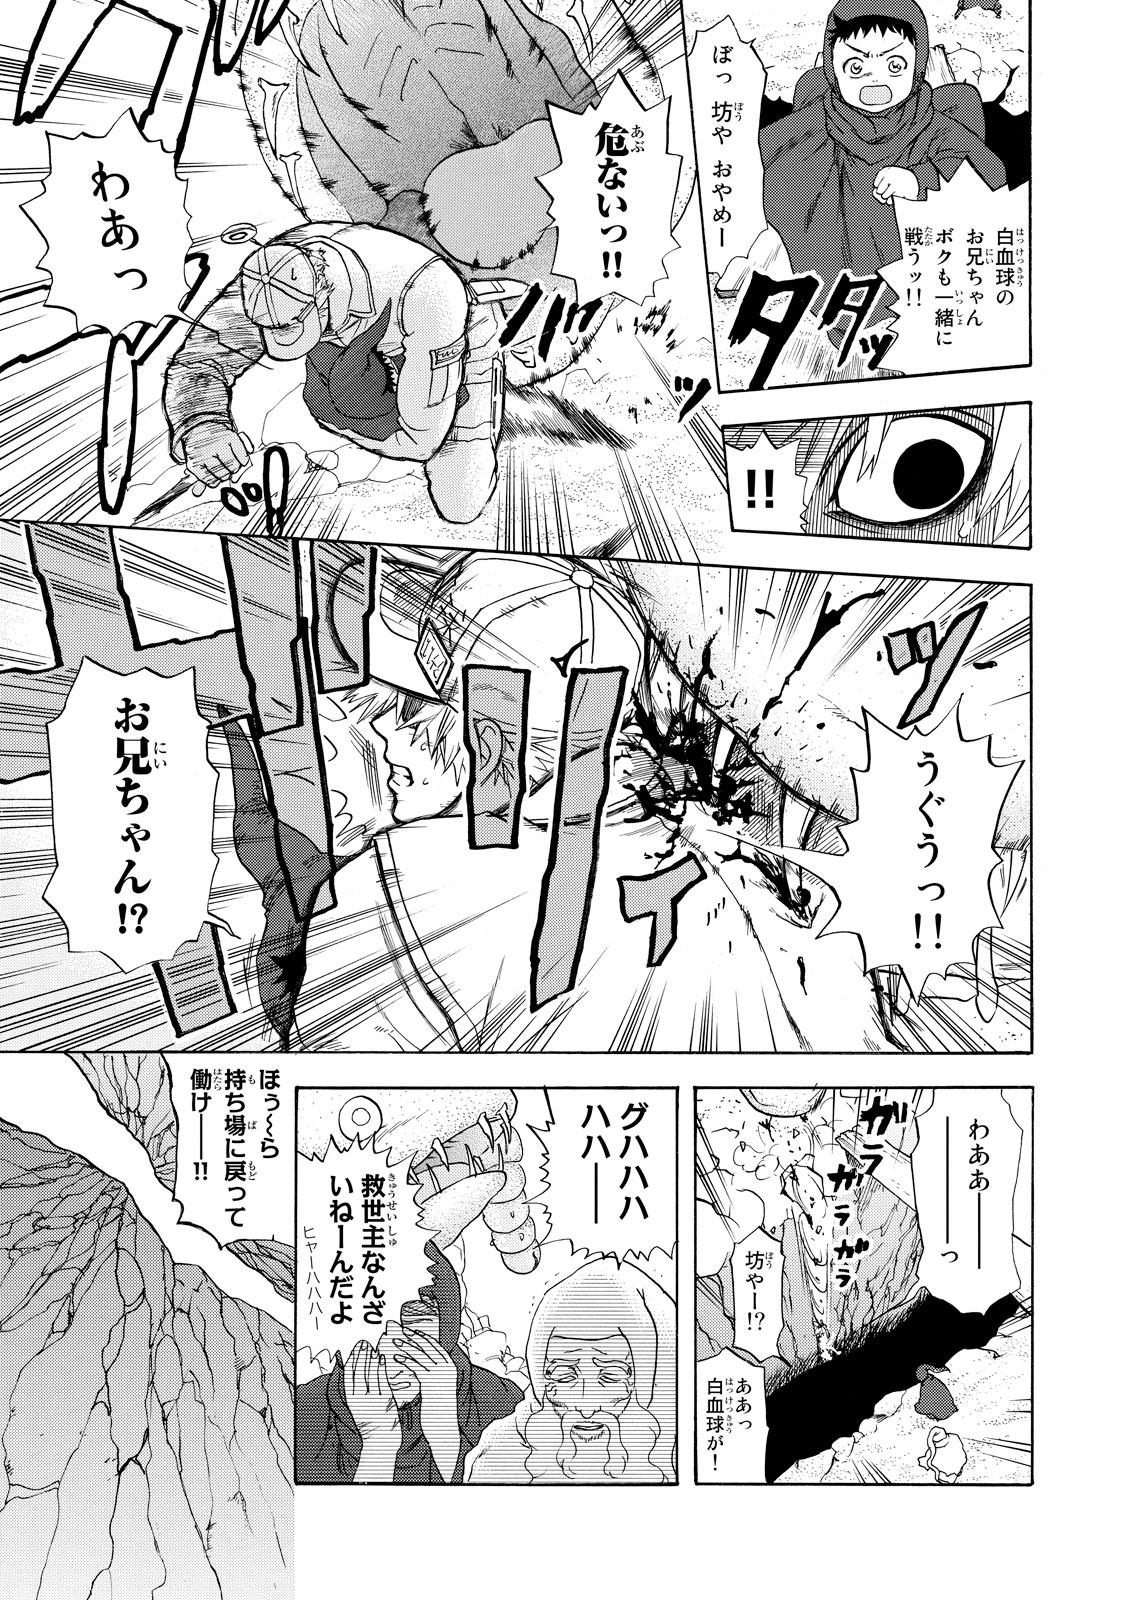 Hataraku Saibou - Chapter 14 - Page 7